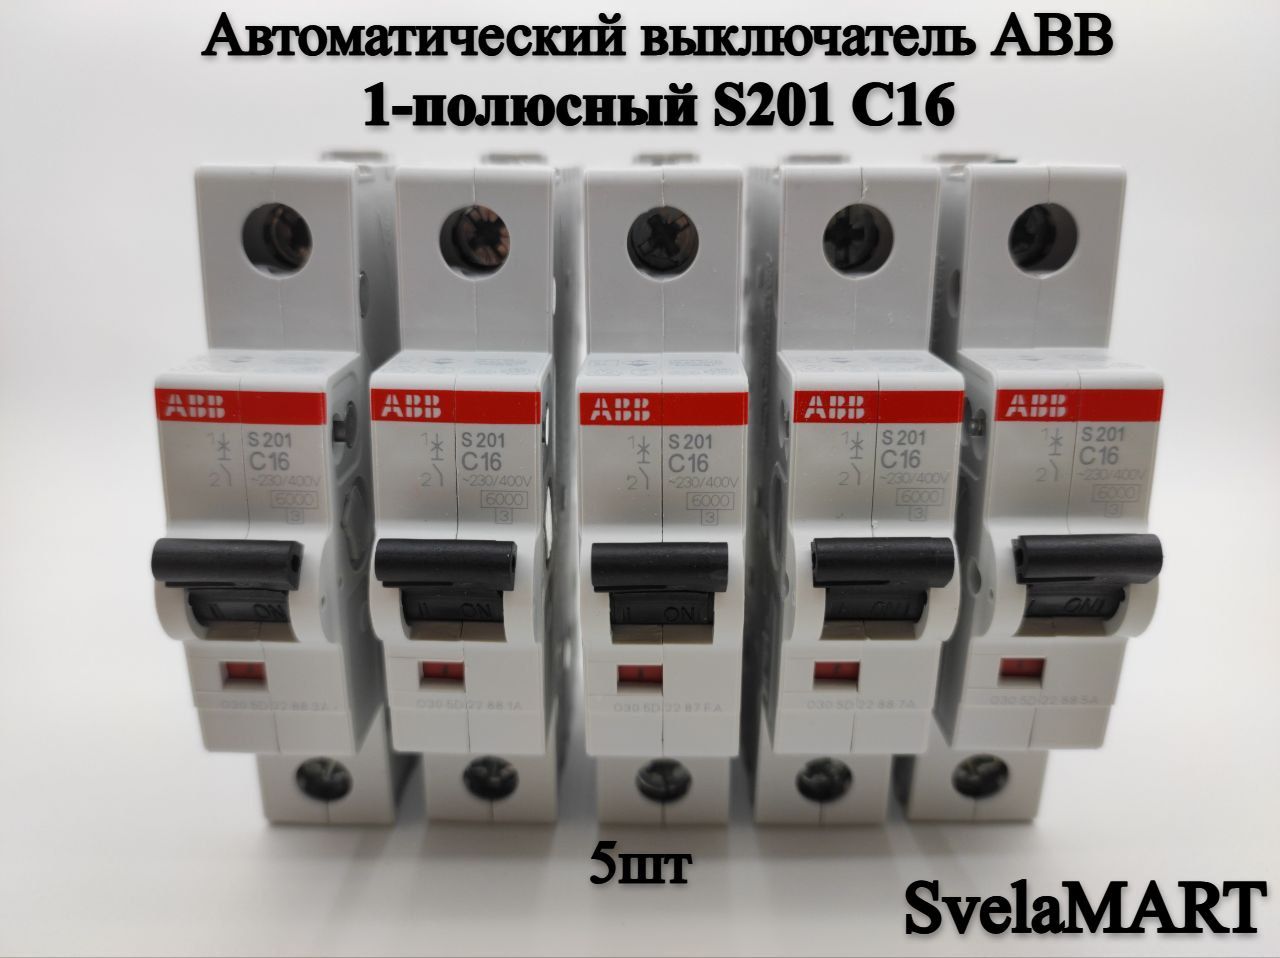 ABB s201 c16. ABB s201 (c) 6ka 16 а.. Импульсное реле АББ на 16 ампер. Дифференциальный автомат ABB ds201. Купить автоматические выключатели abb